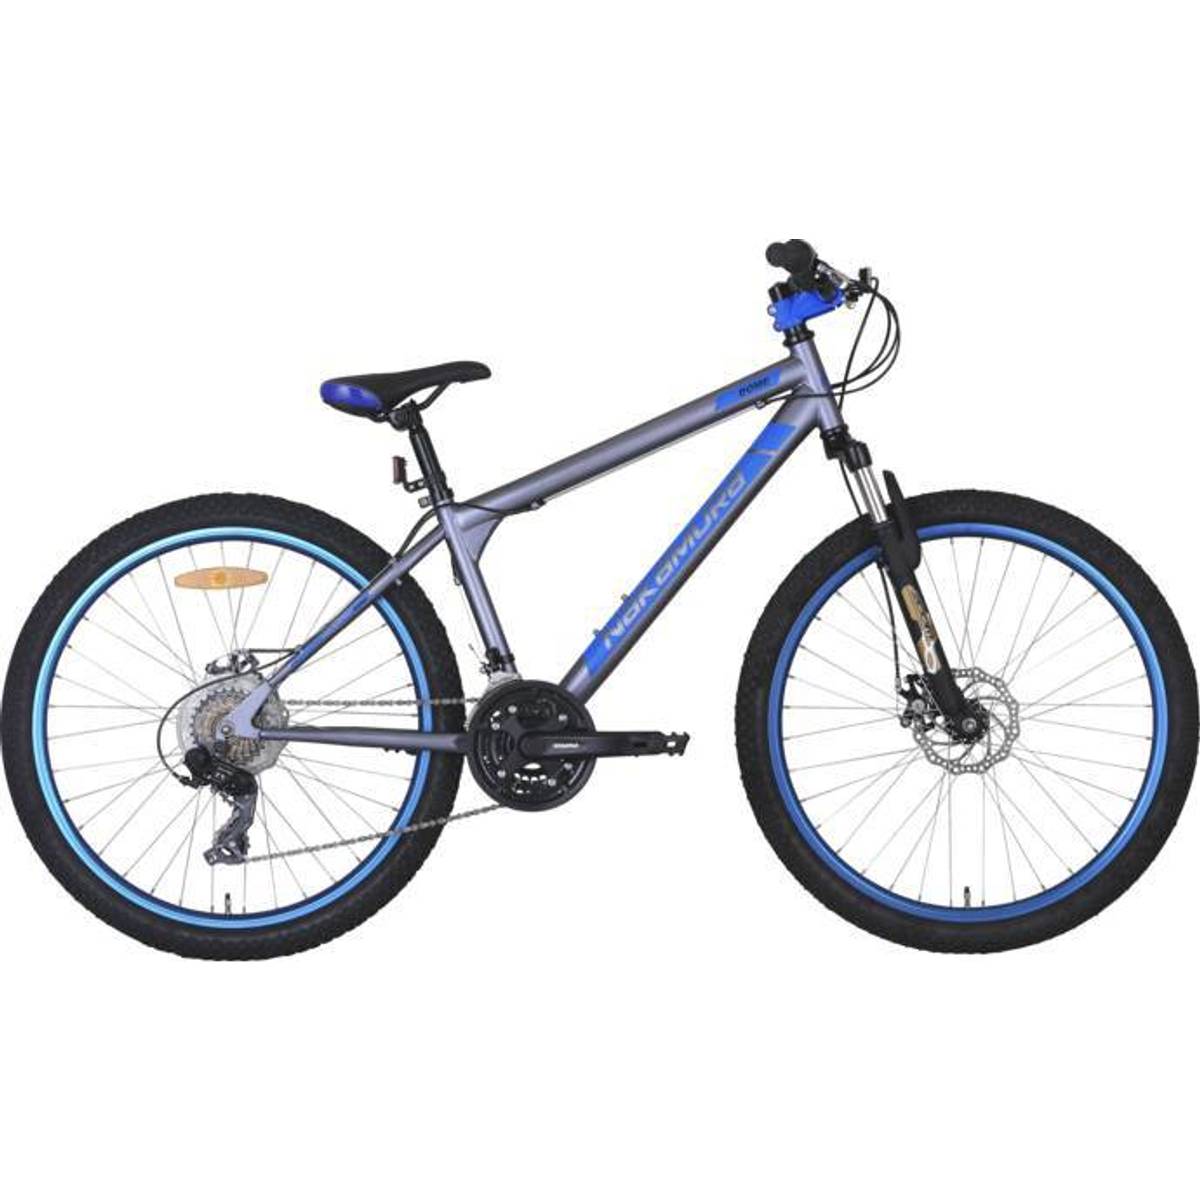 Nakamura Barn Cyklar (15 produkter) hos PriceRunner • Se priser nu »